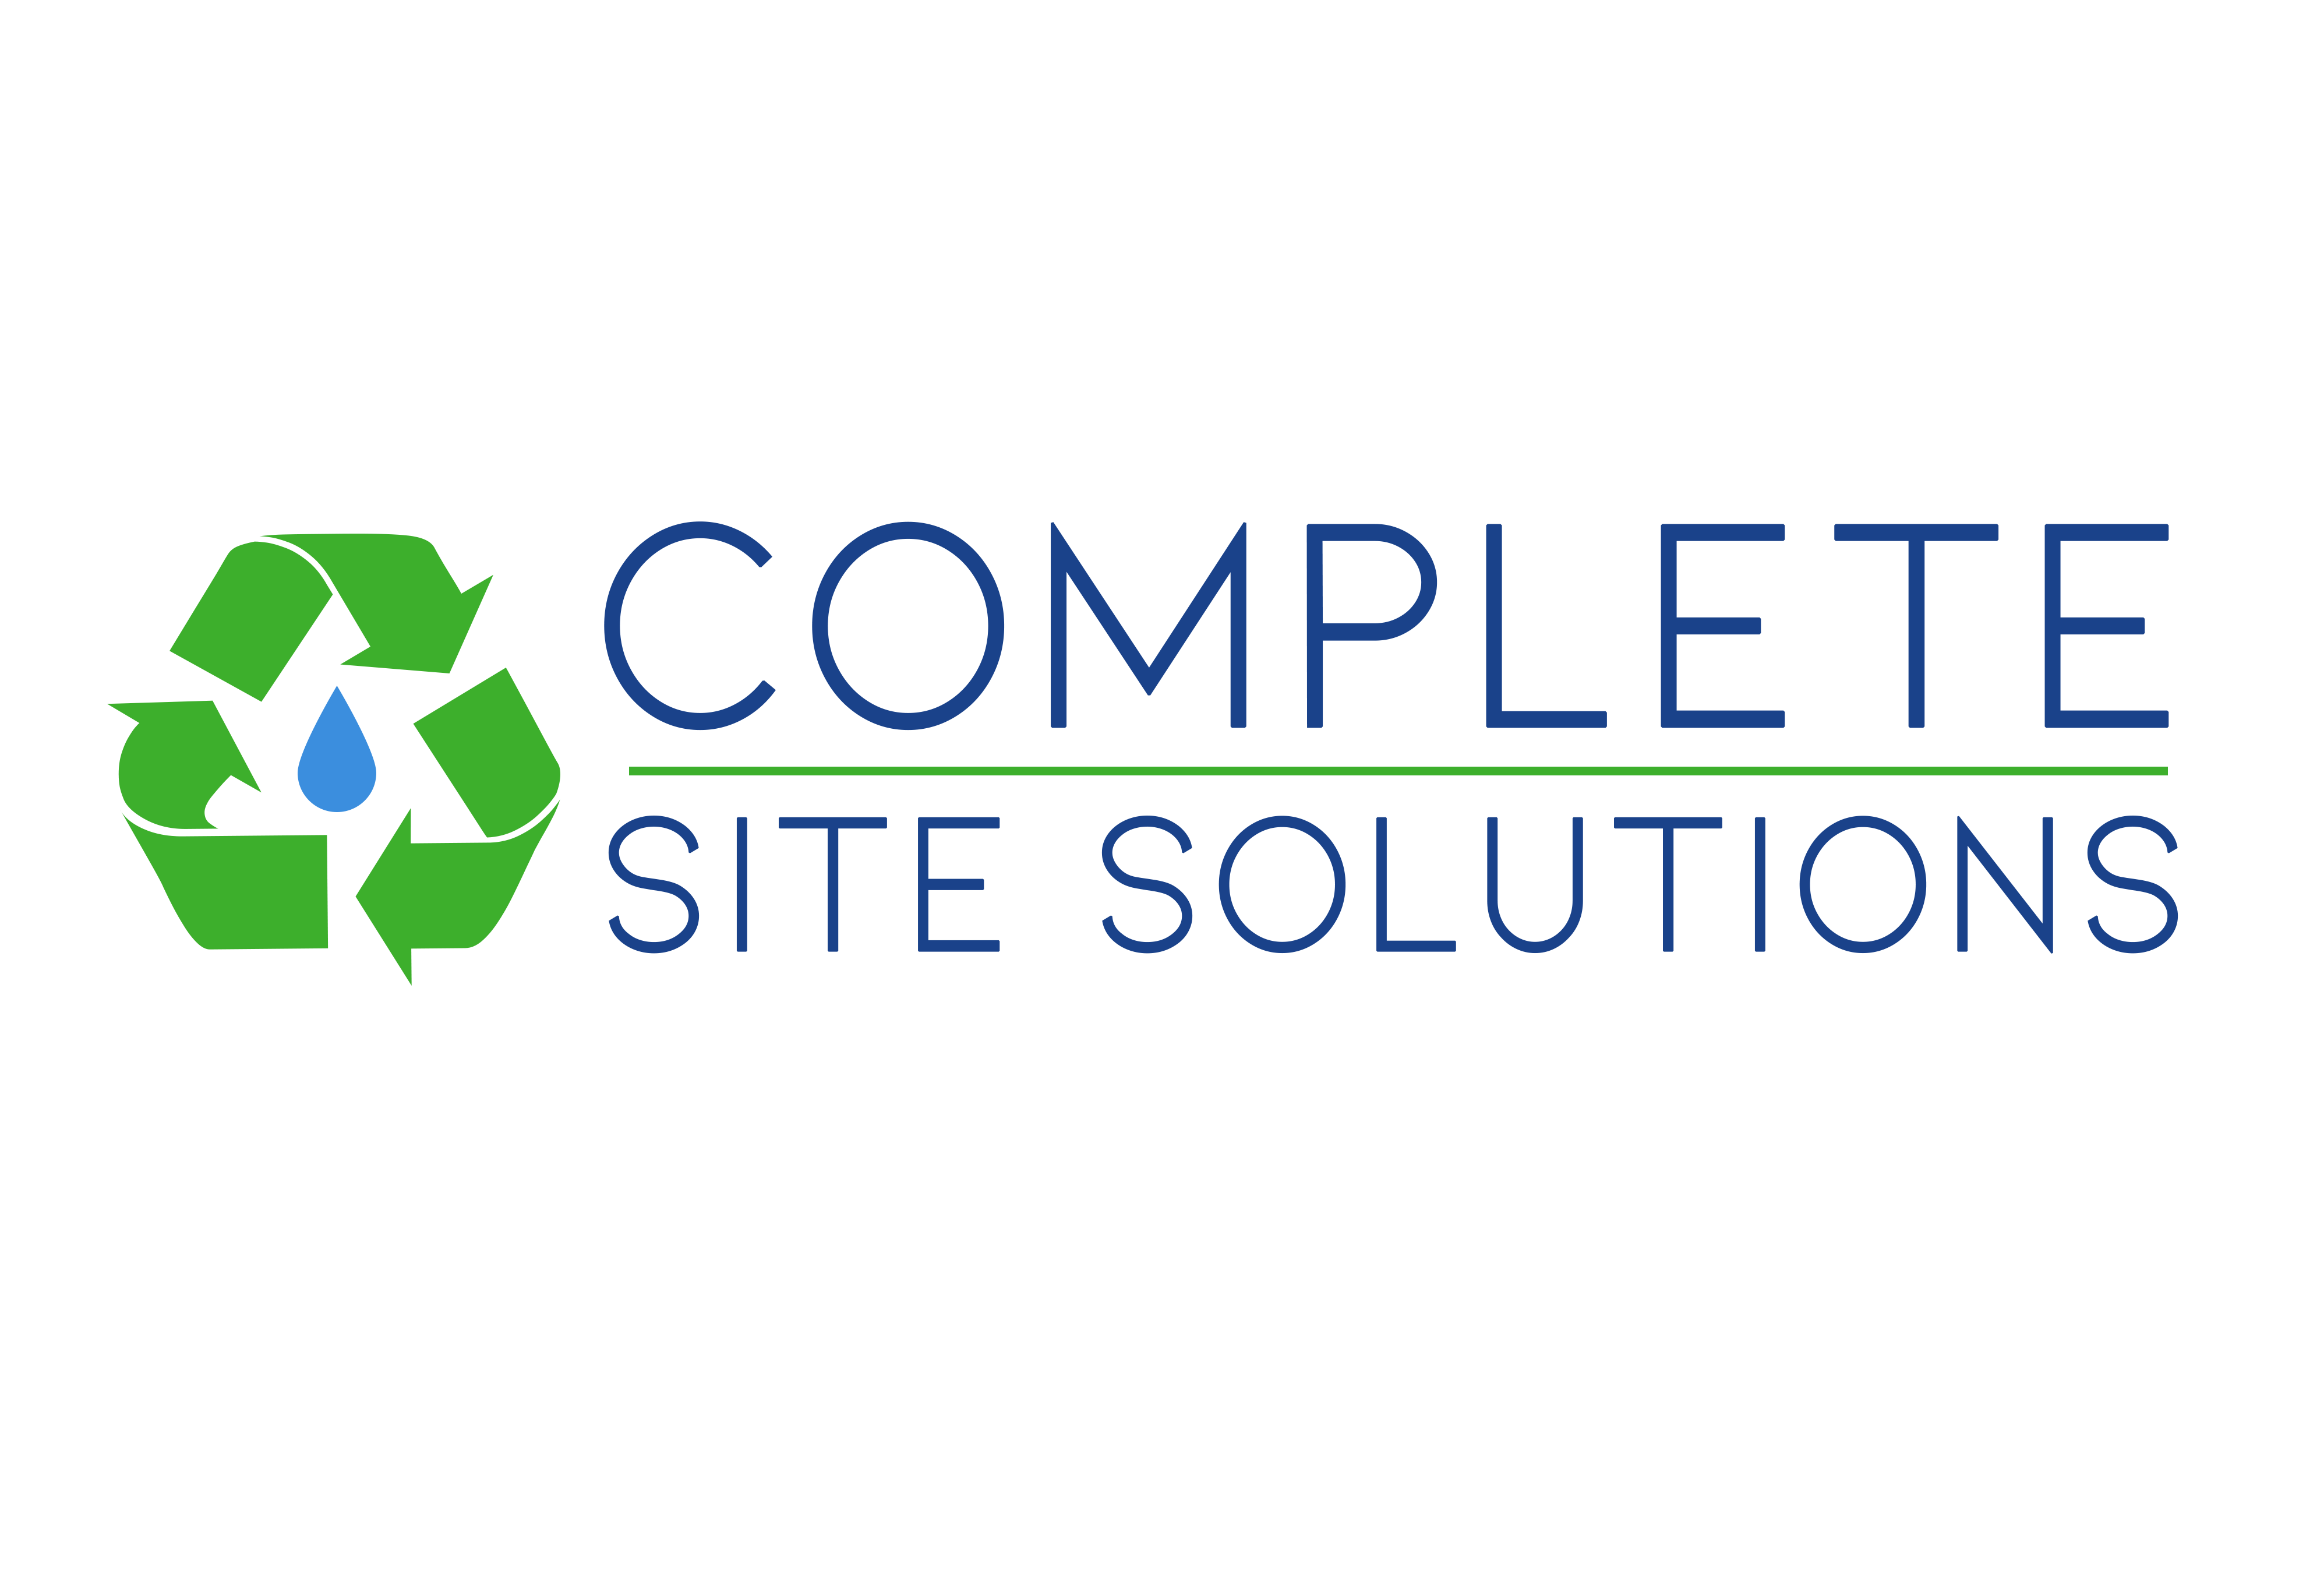 Shop - Complete Site Solutions